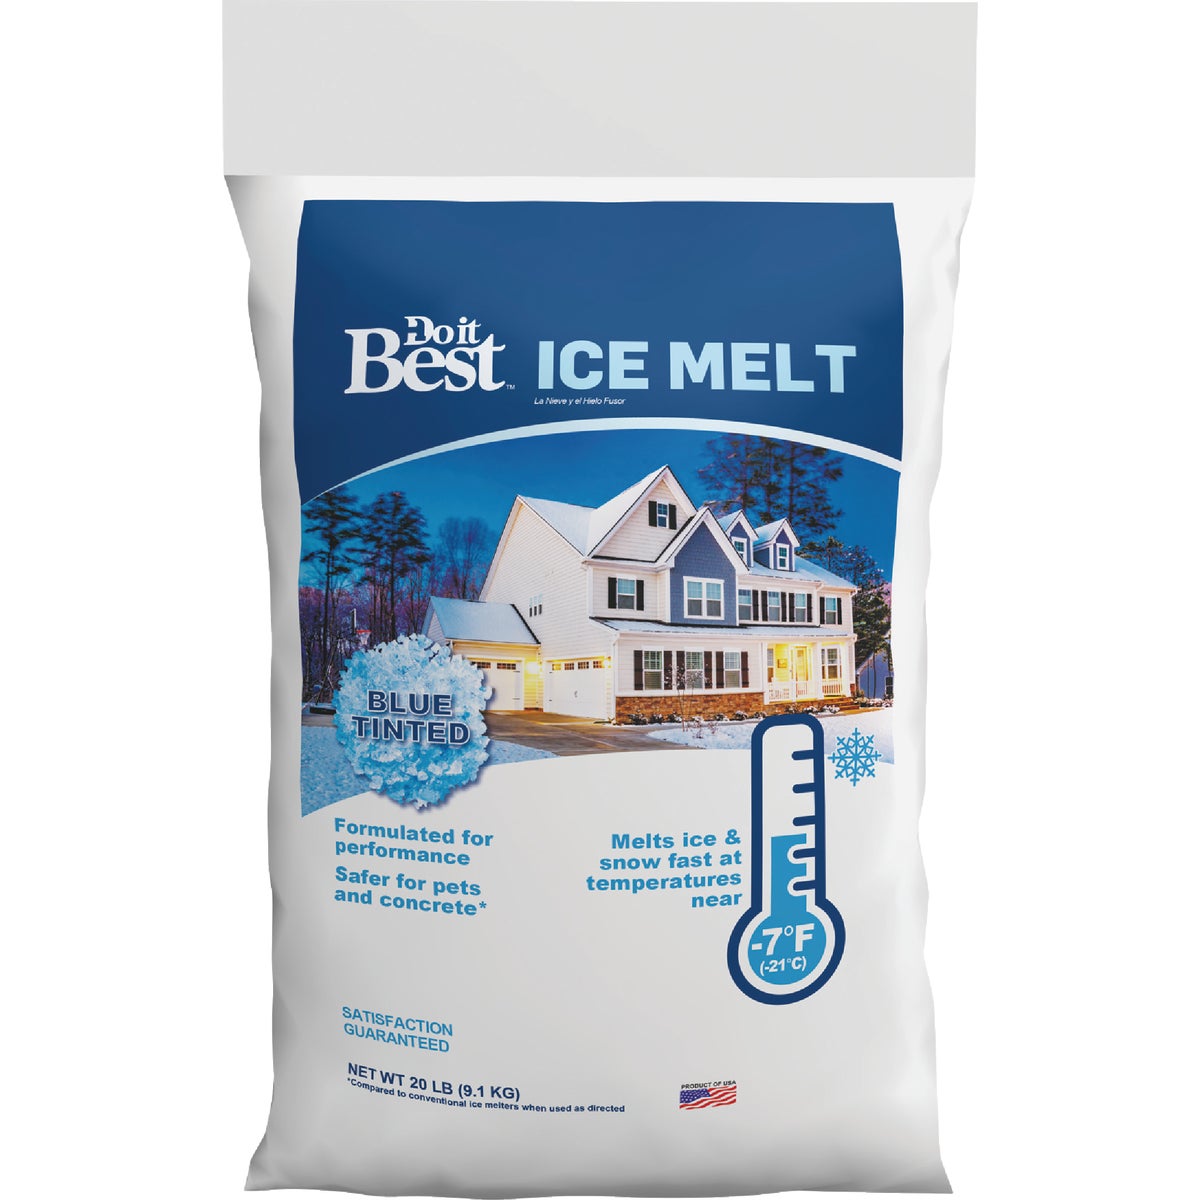 Item 700024, Ice melt ideal for de-icing driveways, sidewalks, steps, and parking lots.